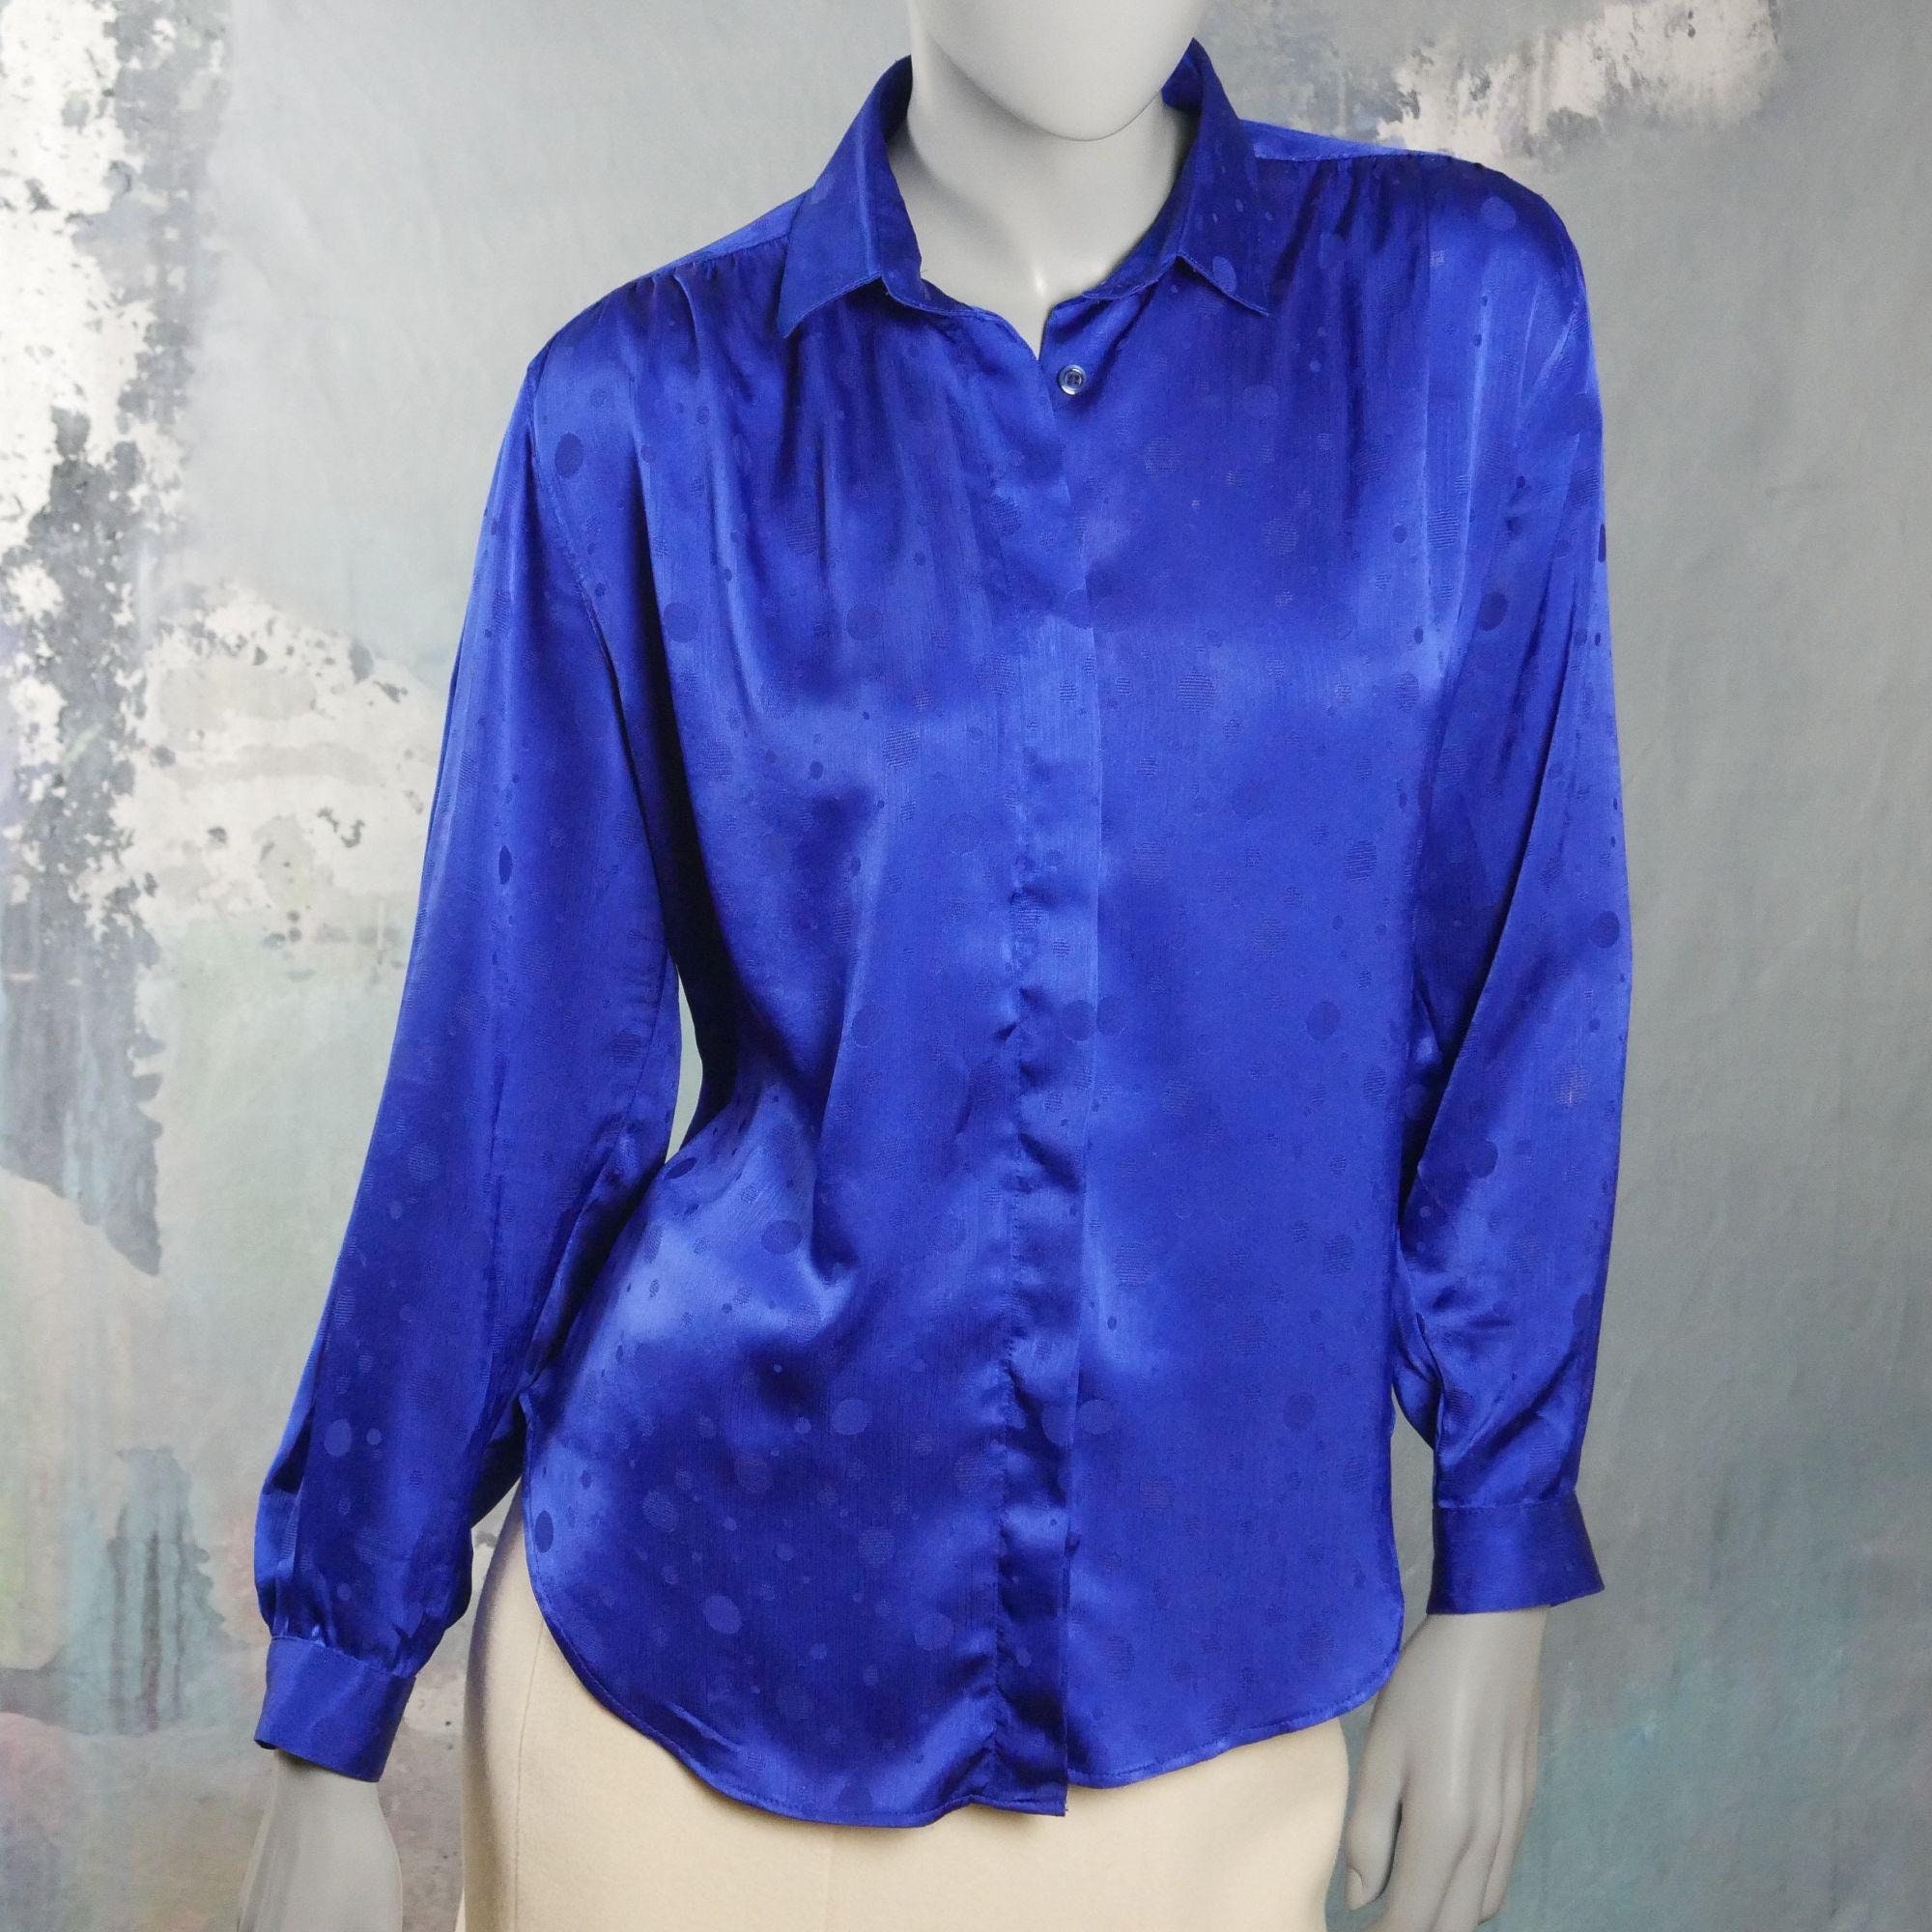 Blue Satin Blouse 90s Vintage Long-sleeve Shirt Style Top | Etsy